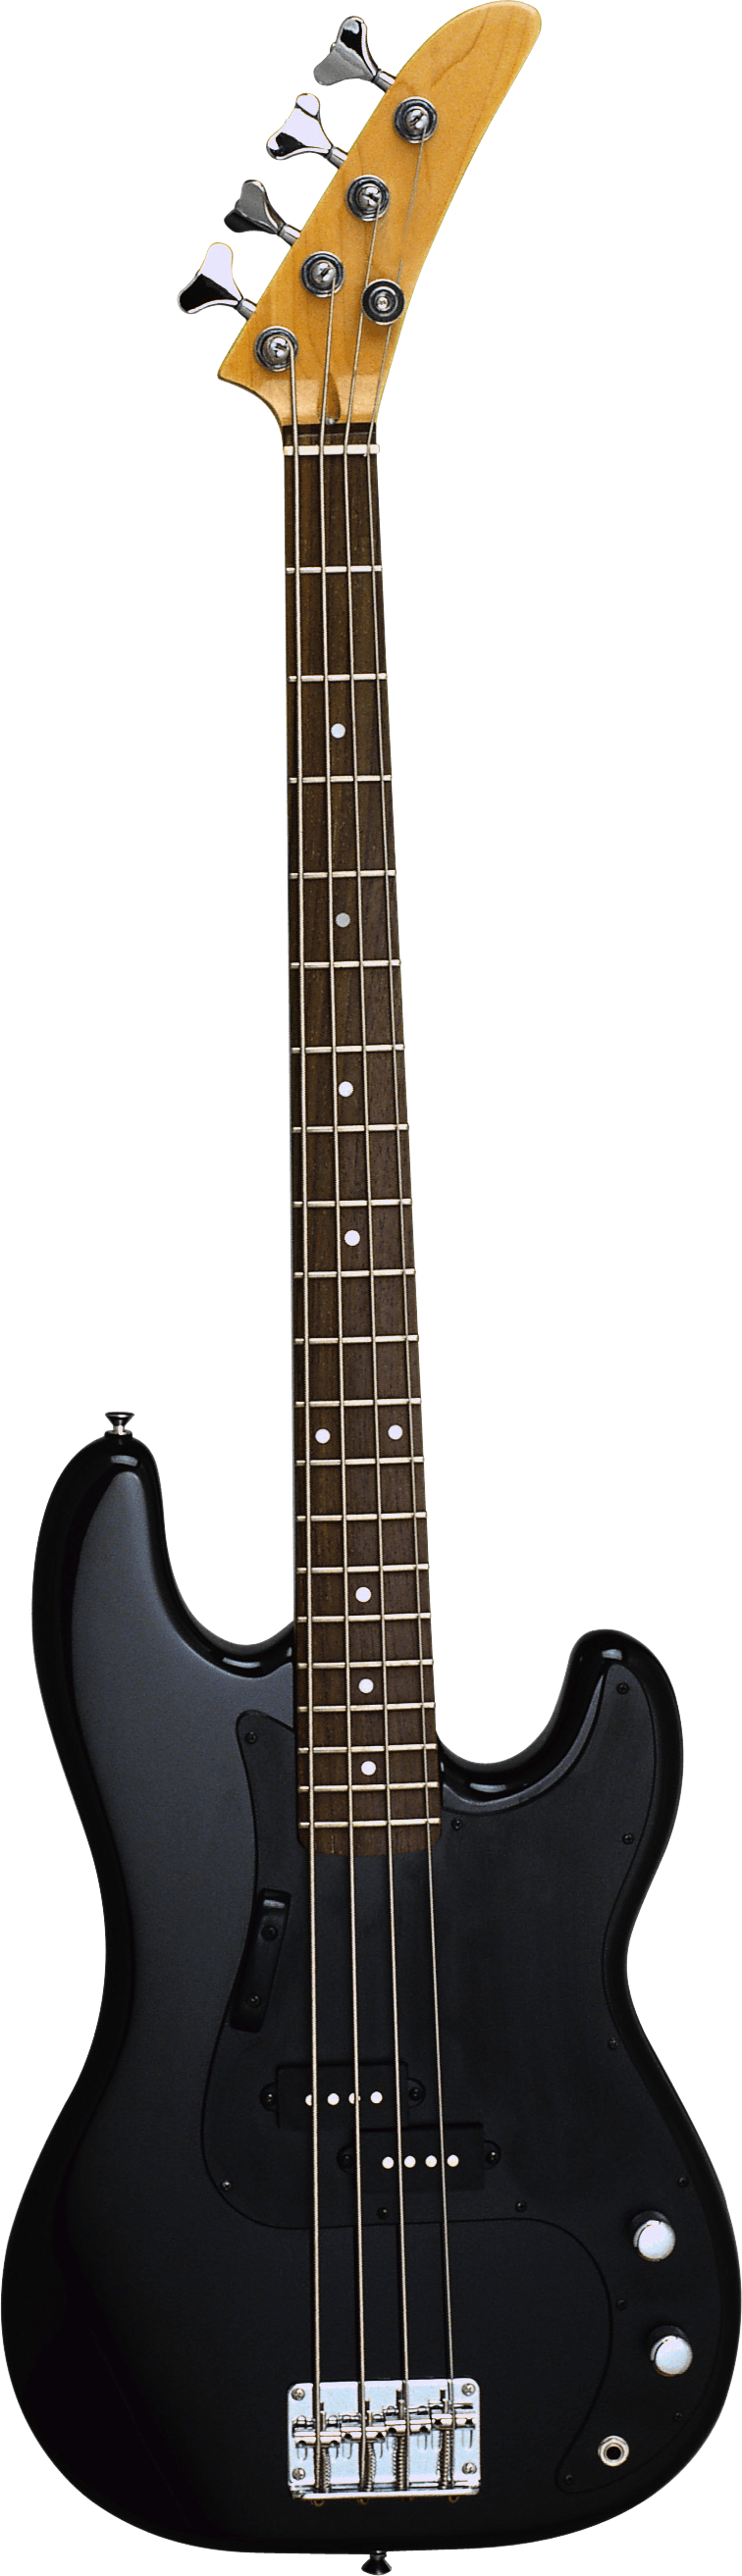 Black Electric Guitar Png Image PNG Image